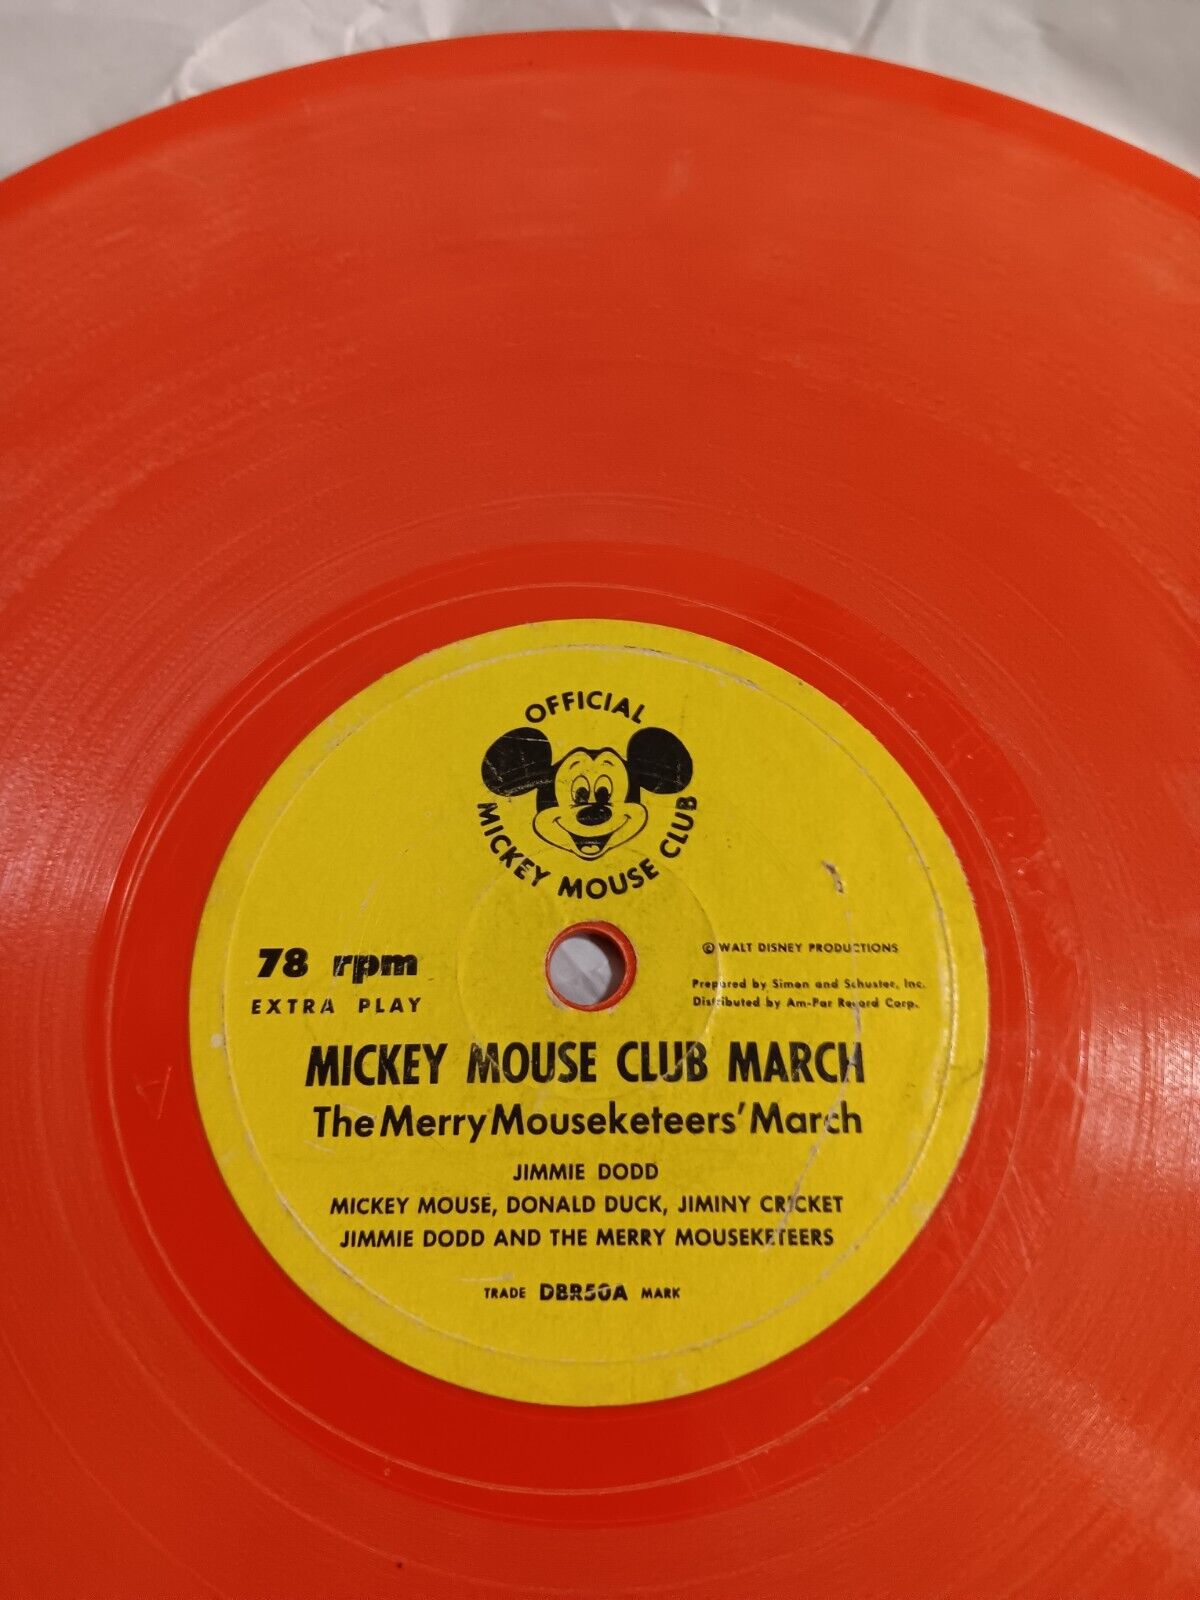 Disney Vintage 1955 MICKEY MOUSE CLUB MARCH 78 rpm Orange Vinyl Record